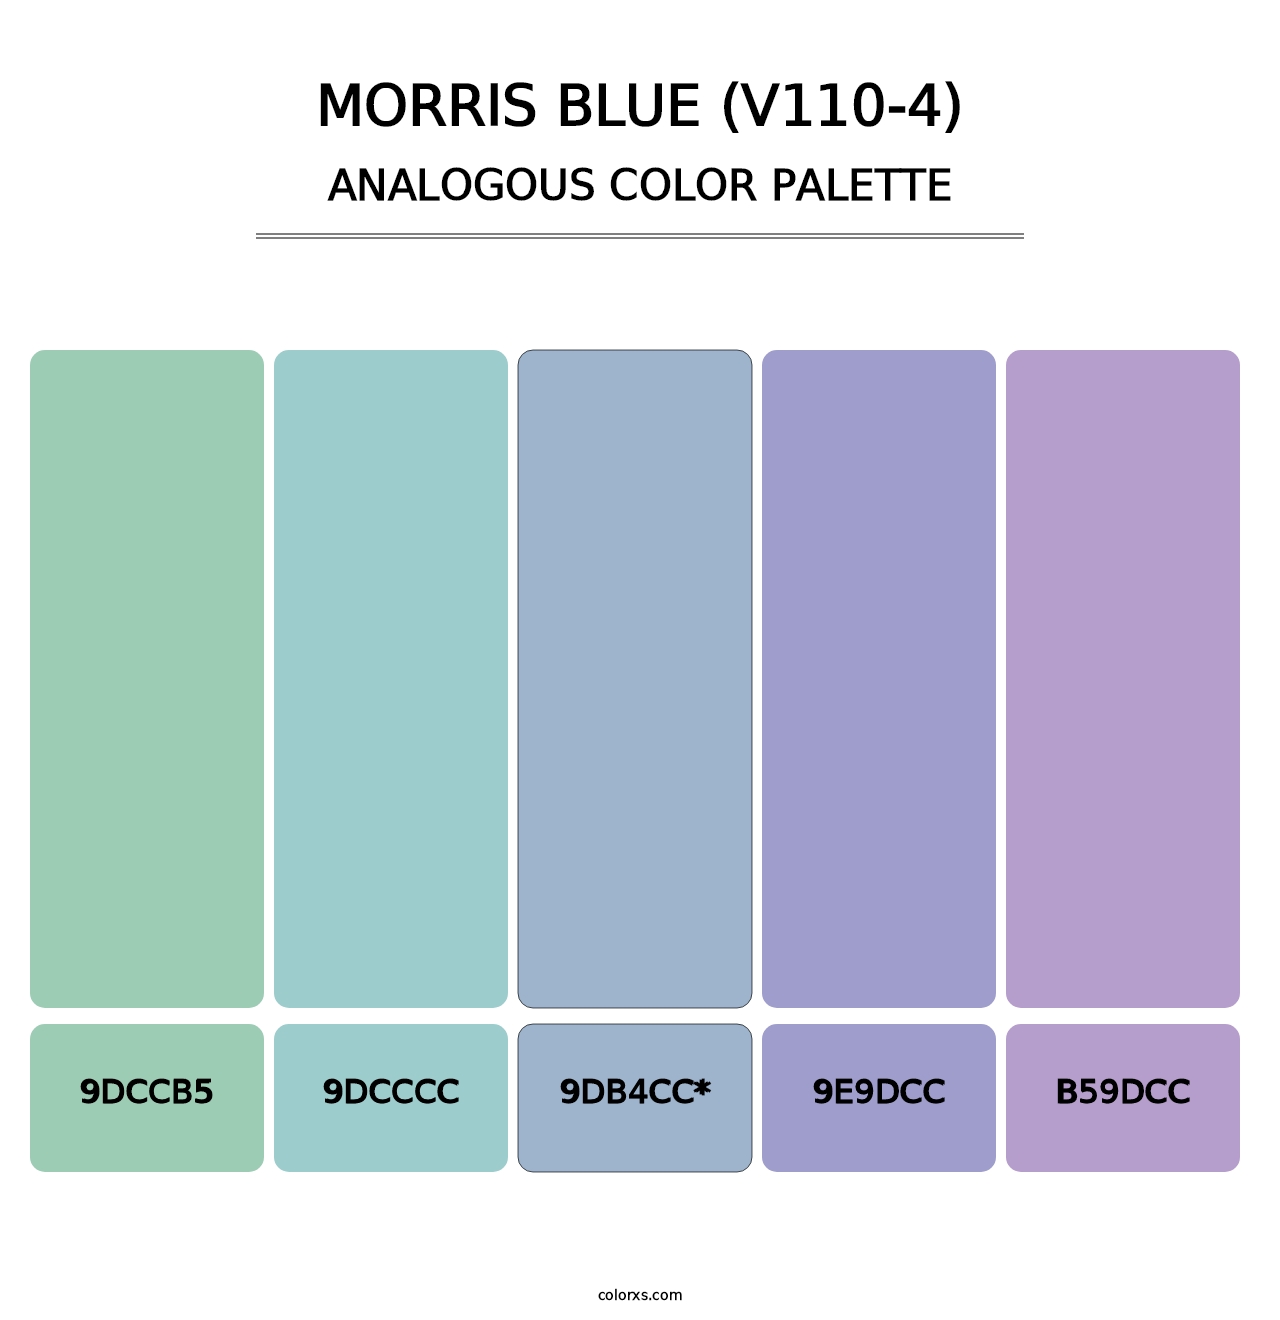 Morris Blue (V110-4) - Analogous Color Palette